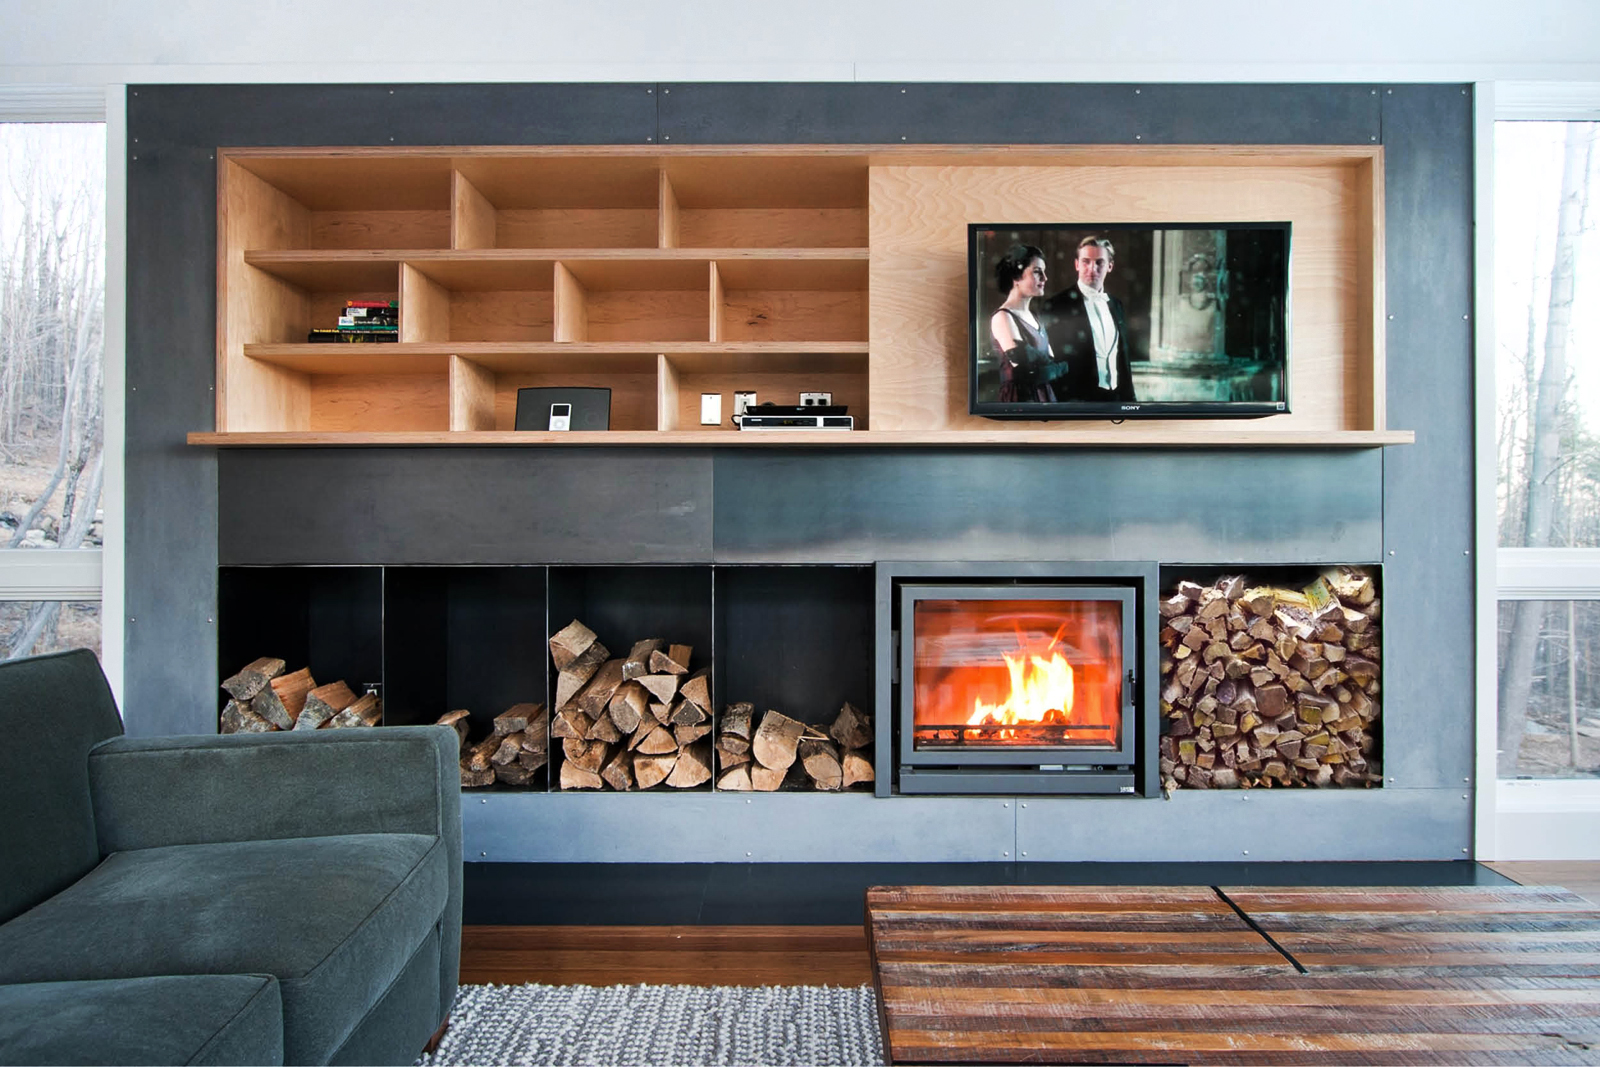 res4-resolution-4-architecture-modern-modular-home-prefab-house-olive-bridge-interior-living-room-fireplace.jpg